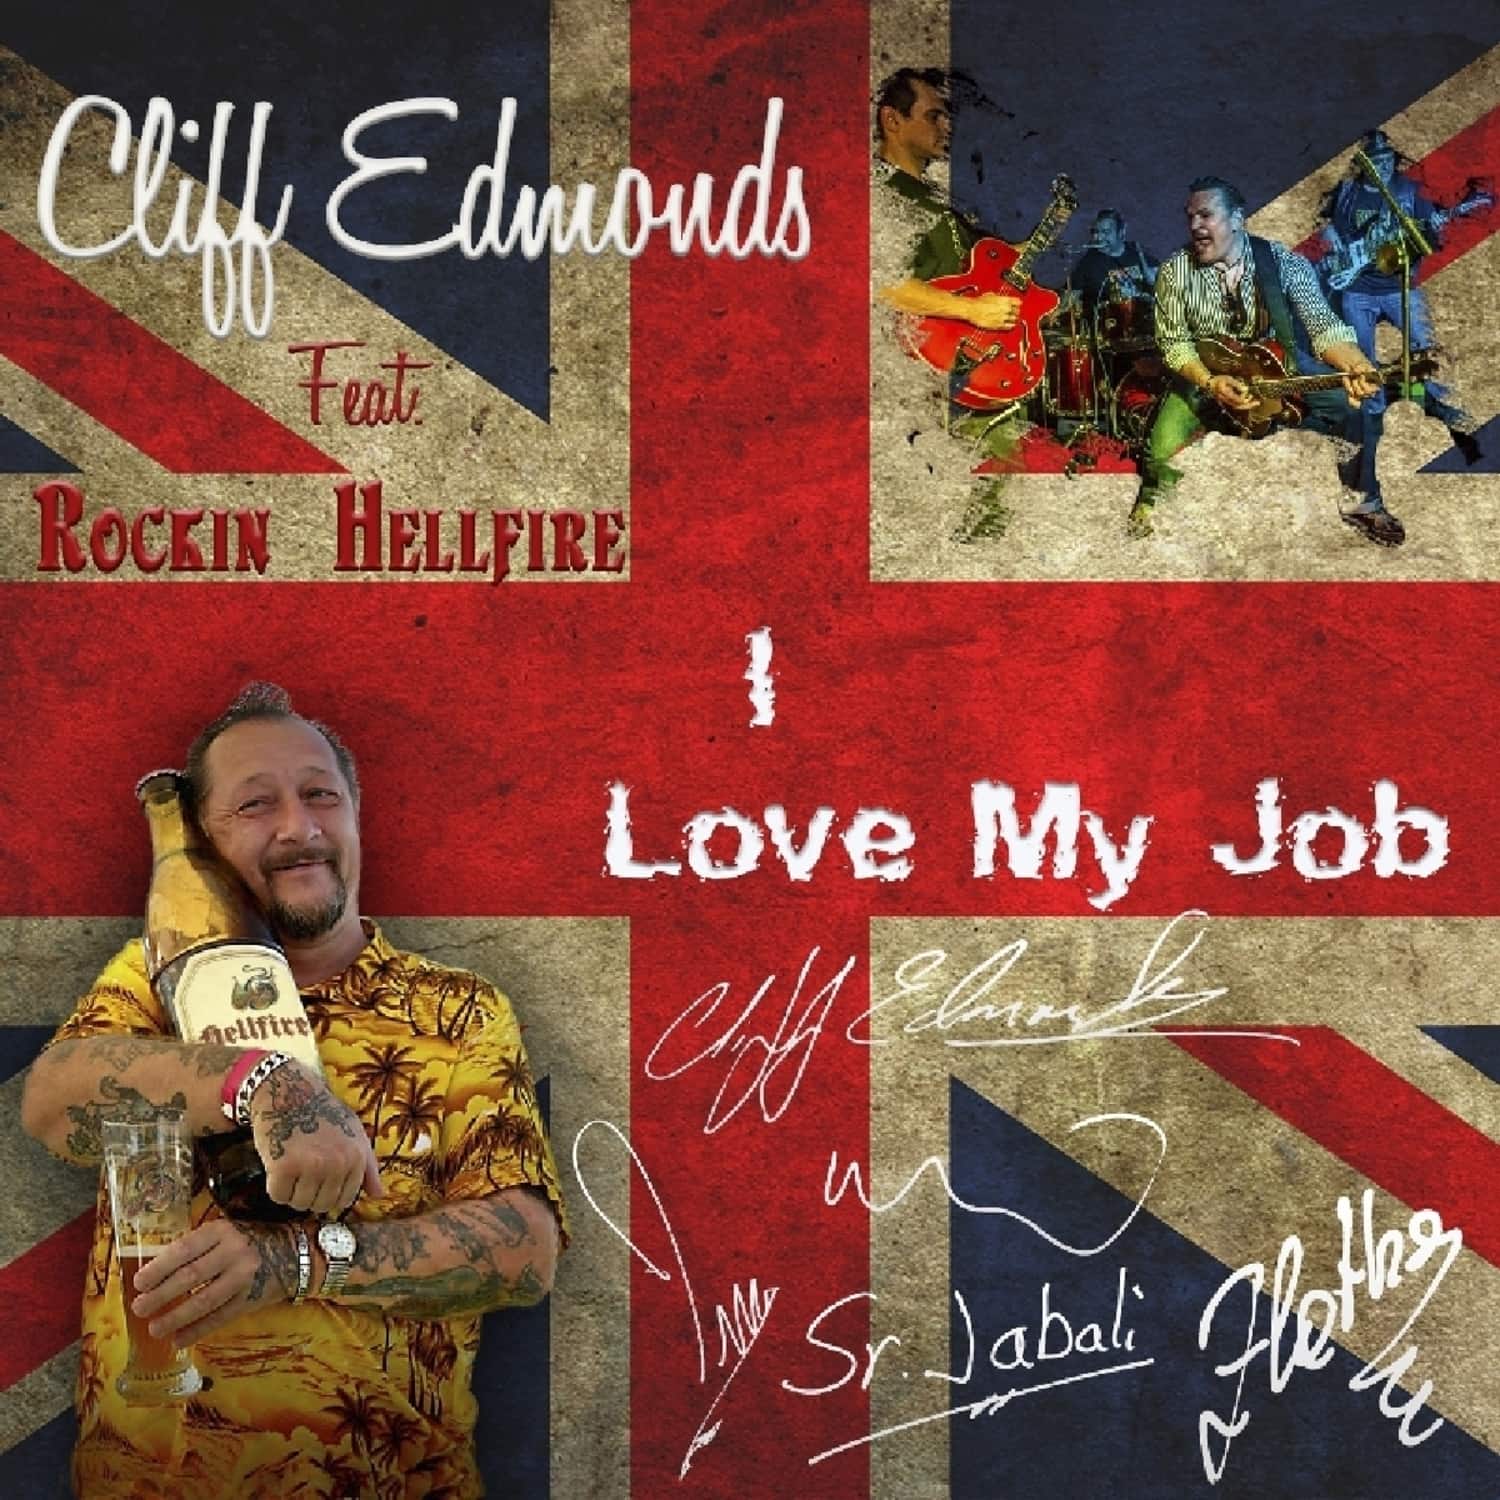  Cliff Edmonds / Rockin Hellfire - I LOVE MY JOB 